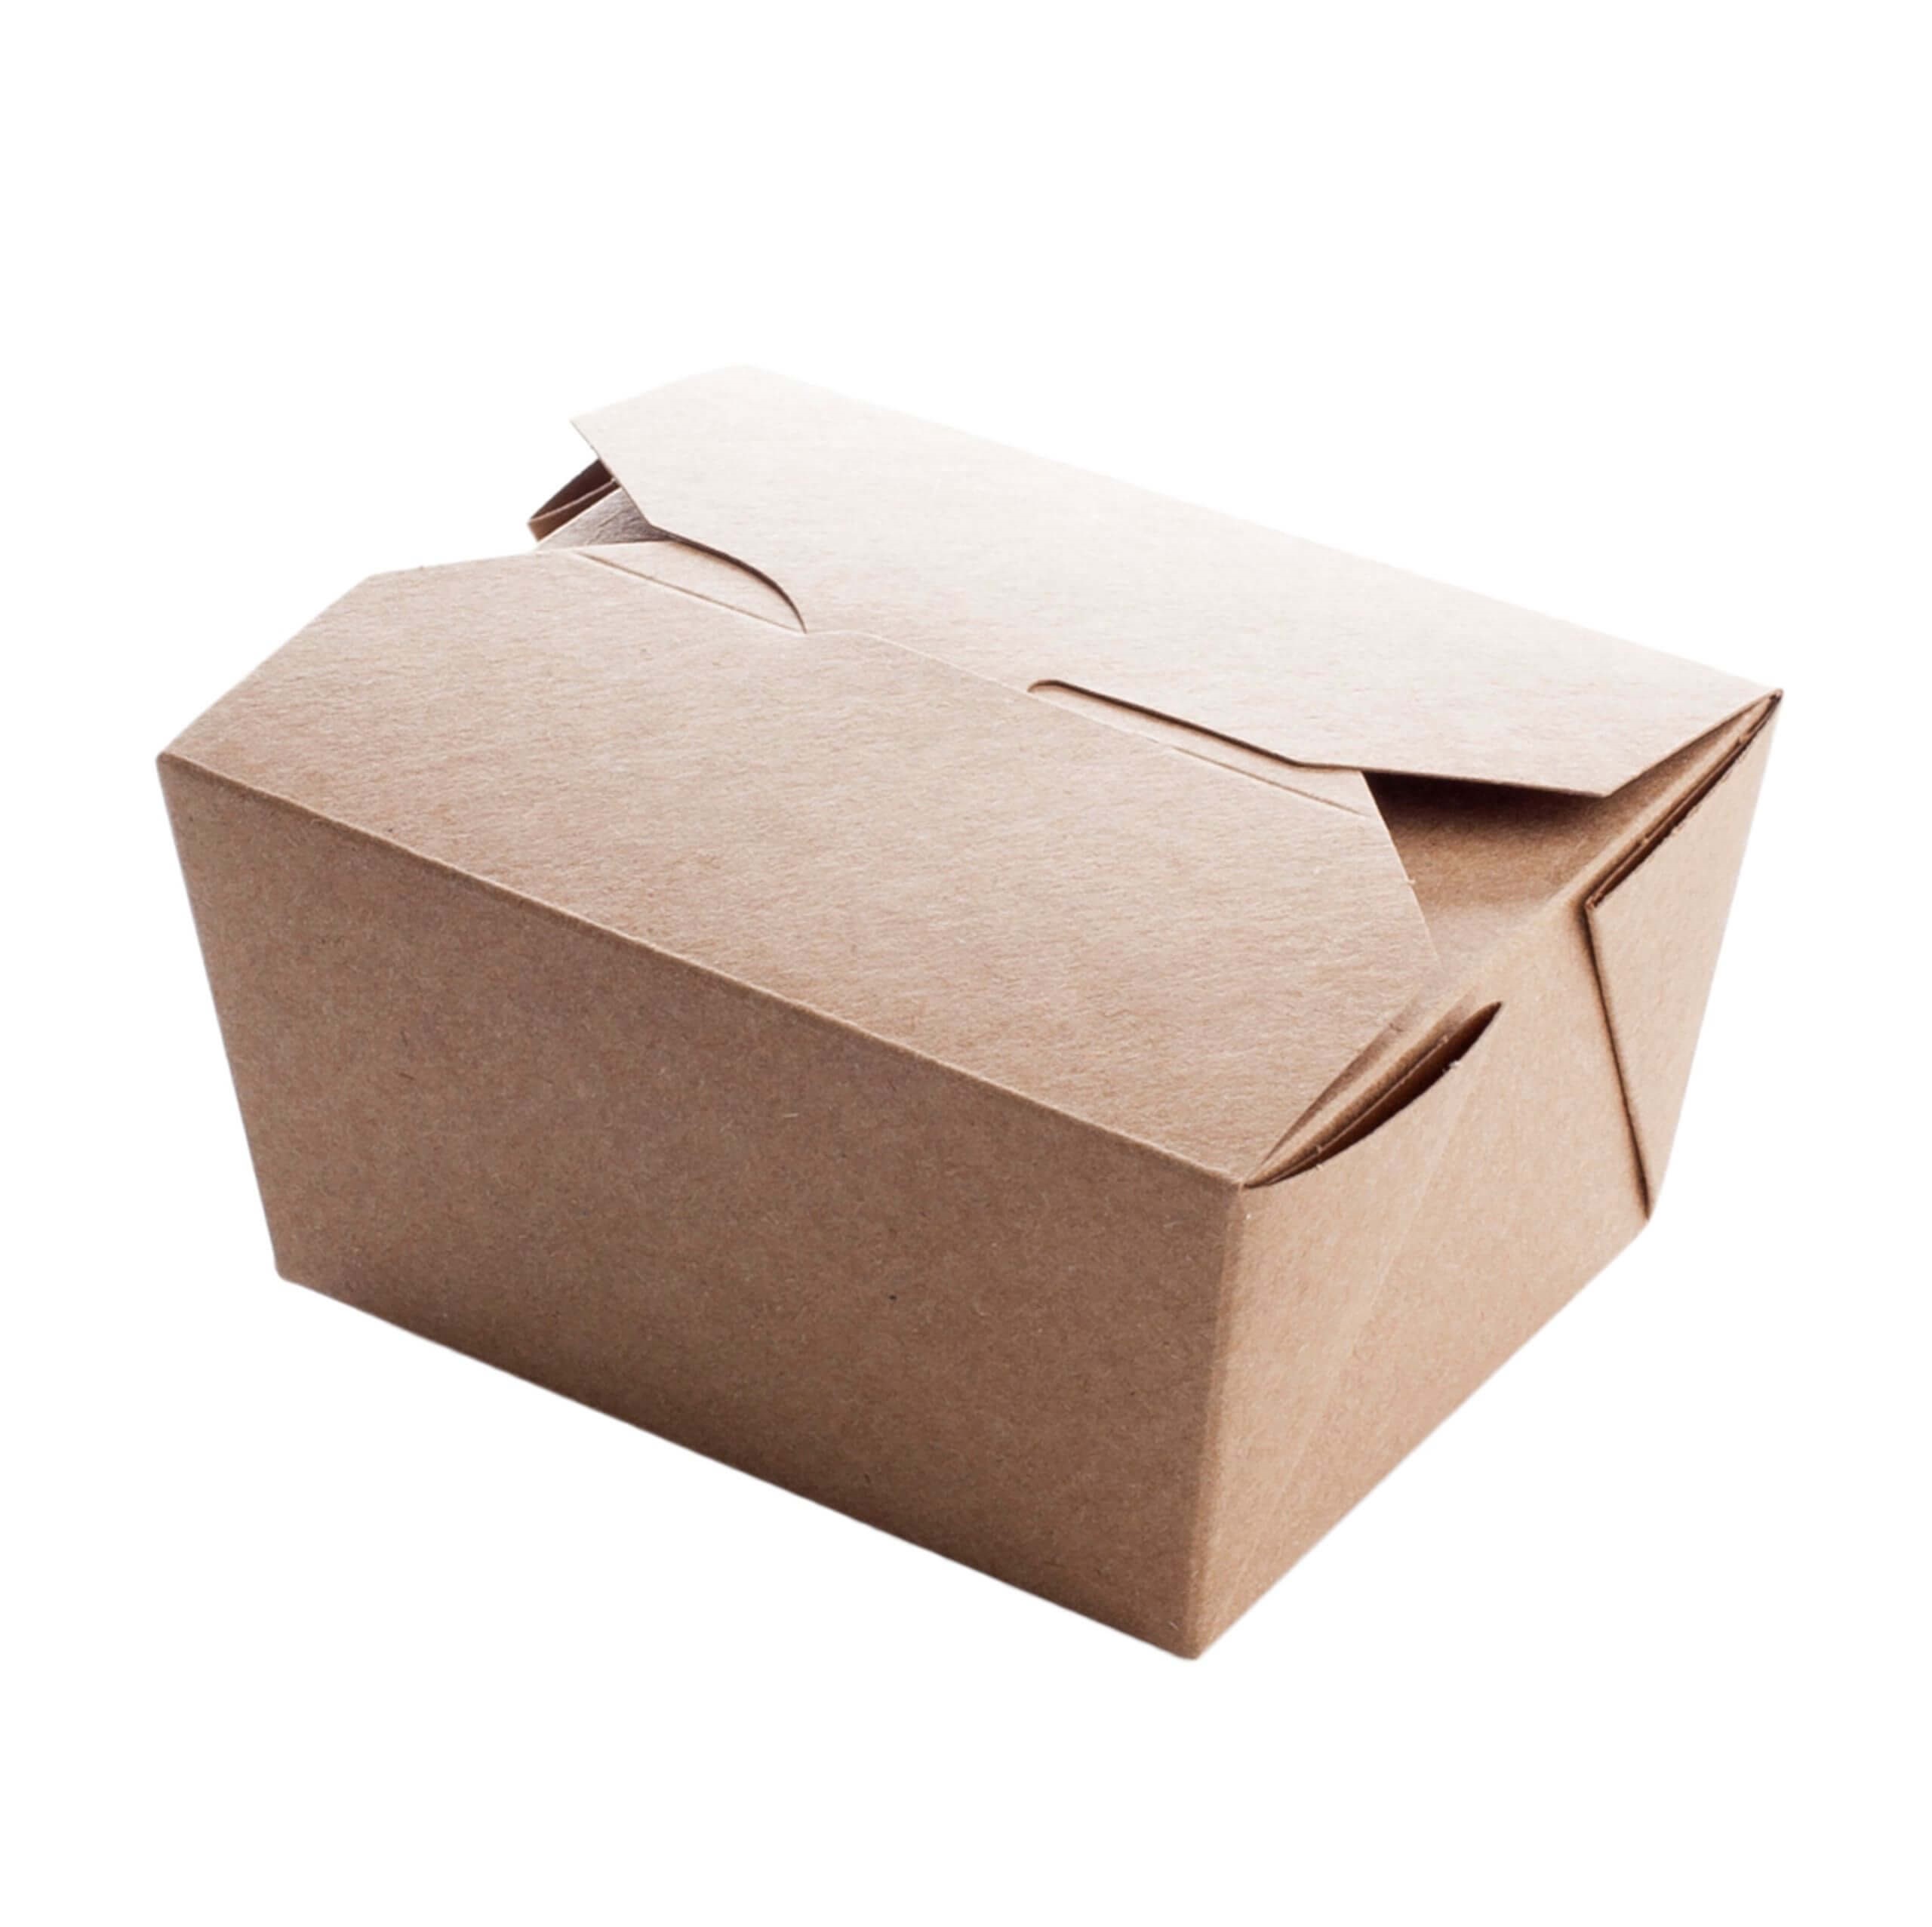 An image of a kraft takeaway food box.